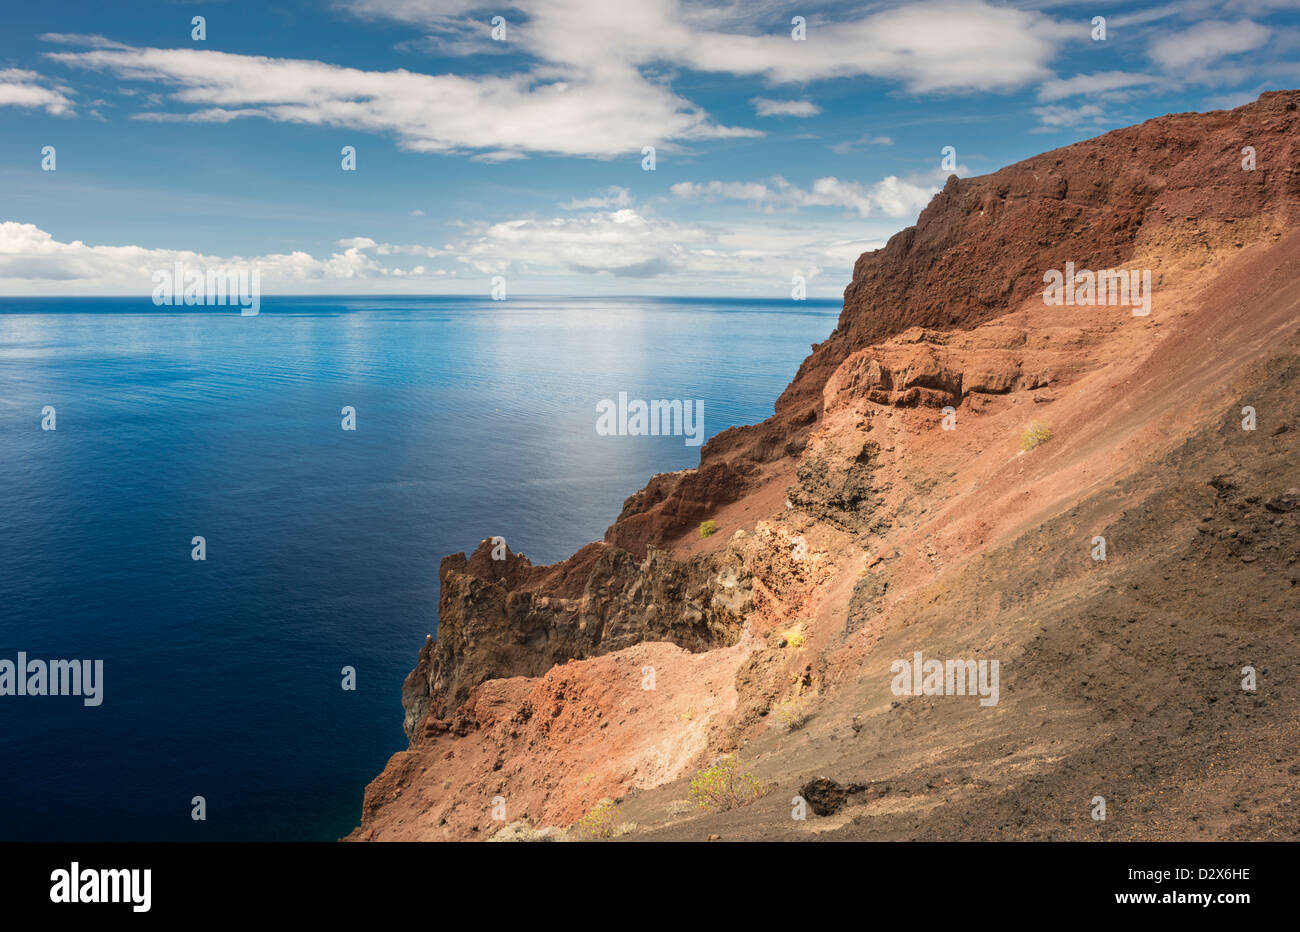 The red volcanic cone of Montana Puerto de Naos, on the south coast of El Hierro, overooking Mar de las Calmas (sea of calm) Stock Photo